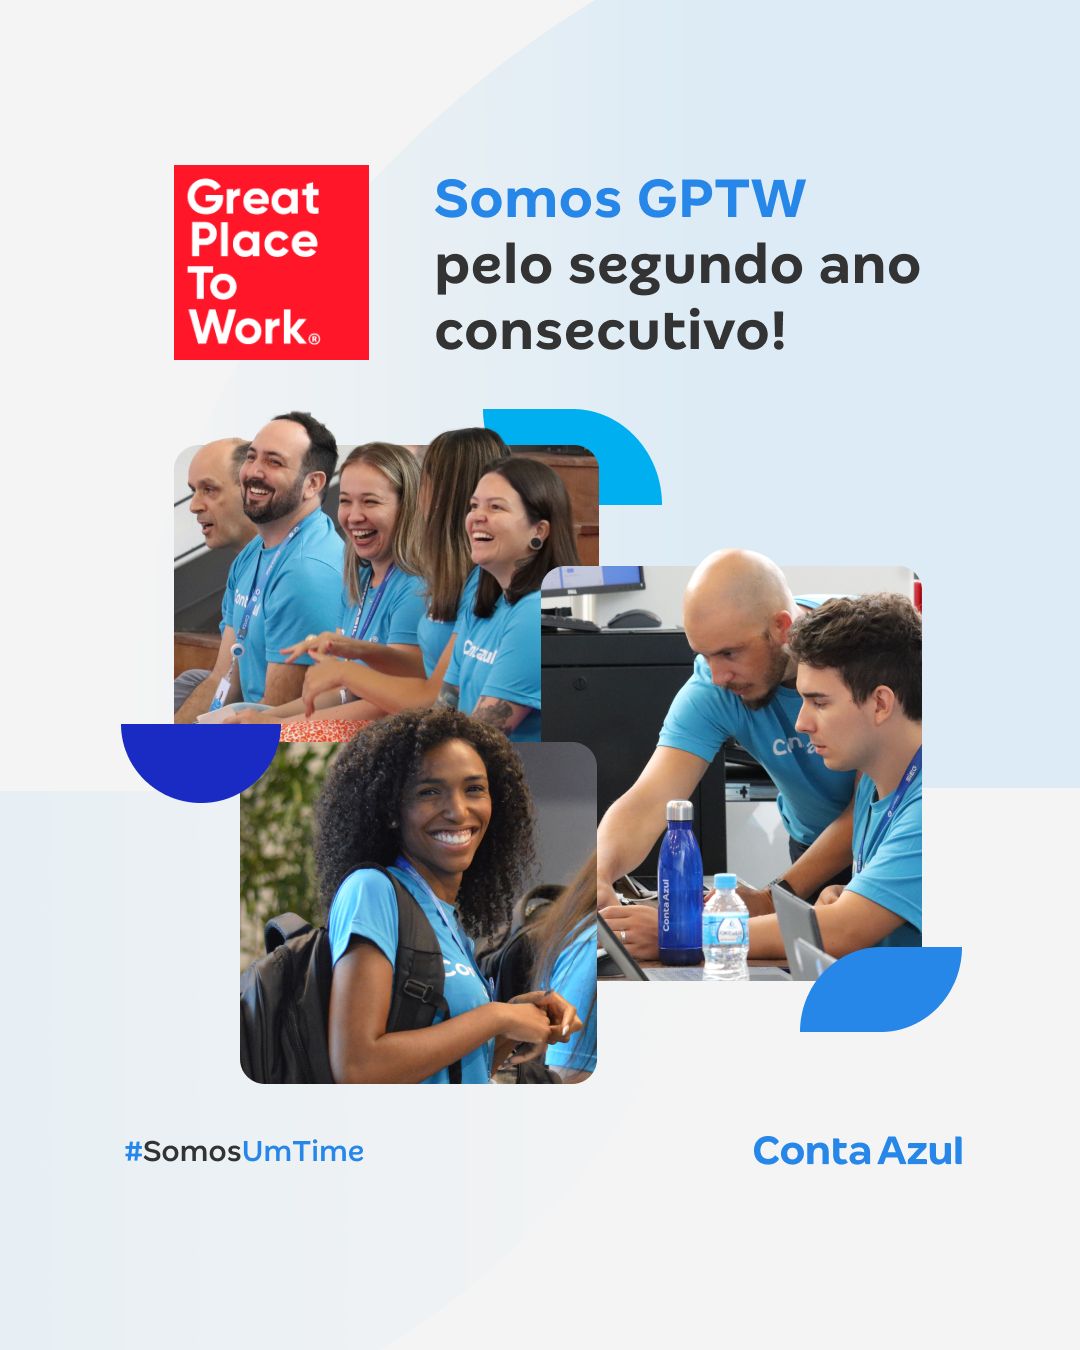 Imagem mostra colaboradores da Conta Azul e a frase "Somos GPTW pelo segundo ano consecutivo"